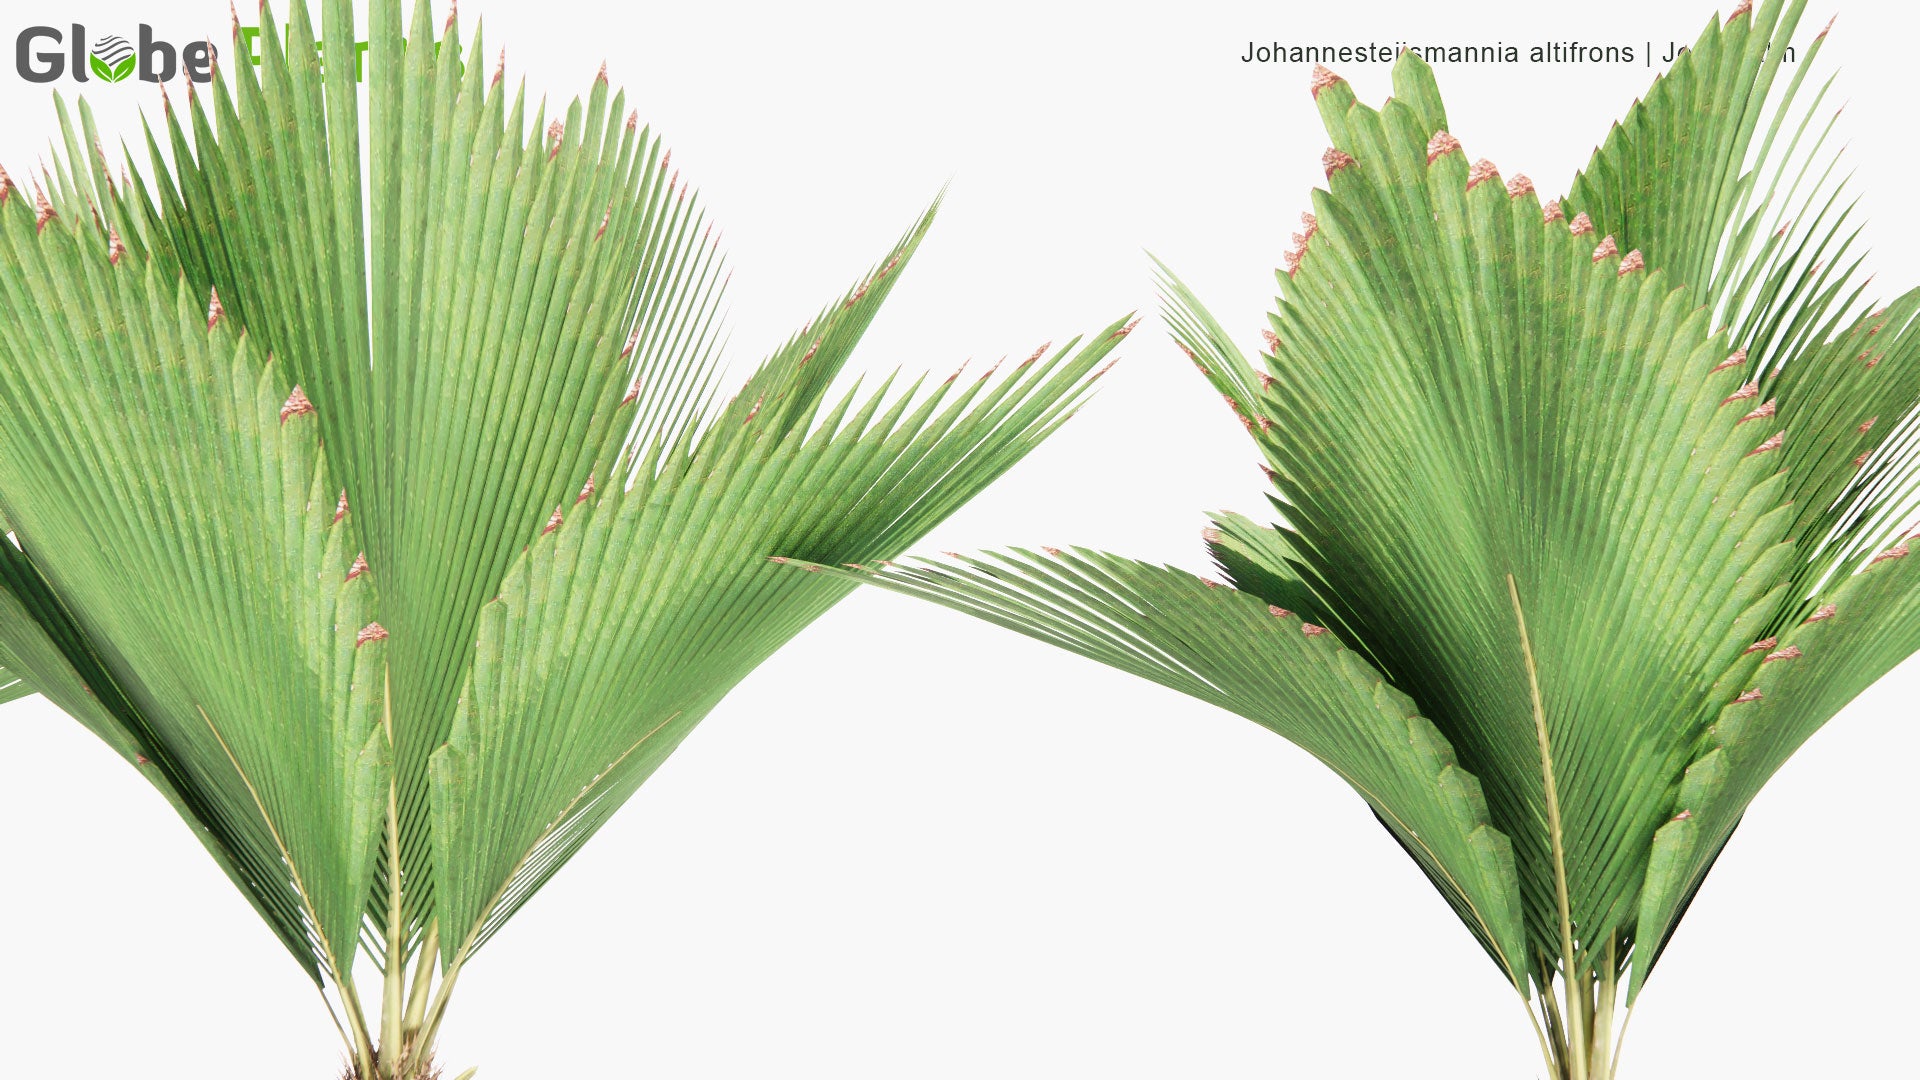 Low Poly Johannesteijsmannia Altifrons - Joey Palm (3D Model)